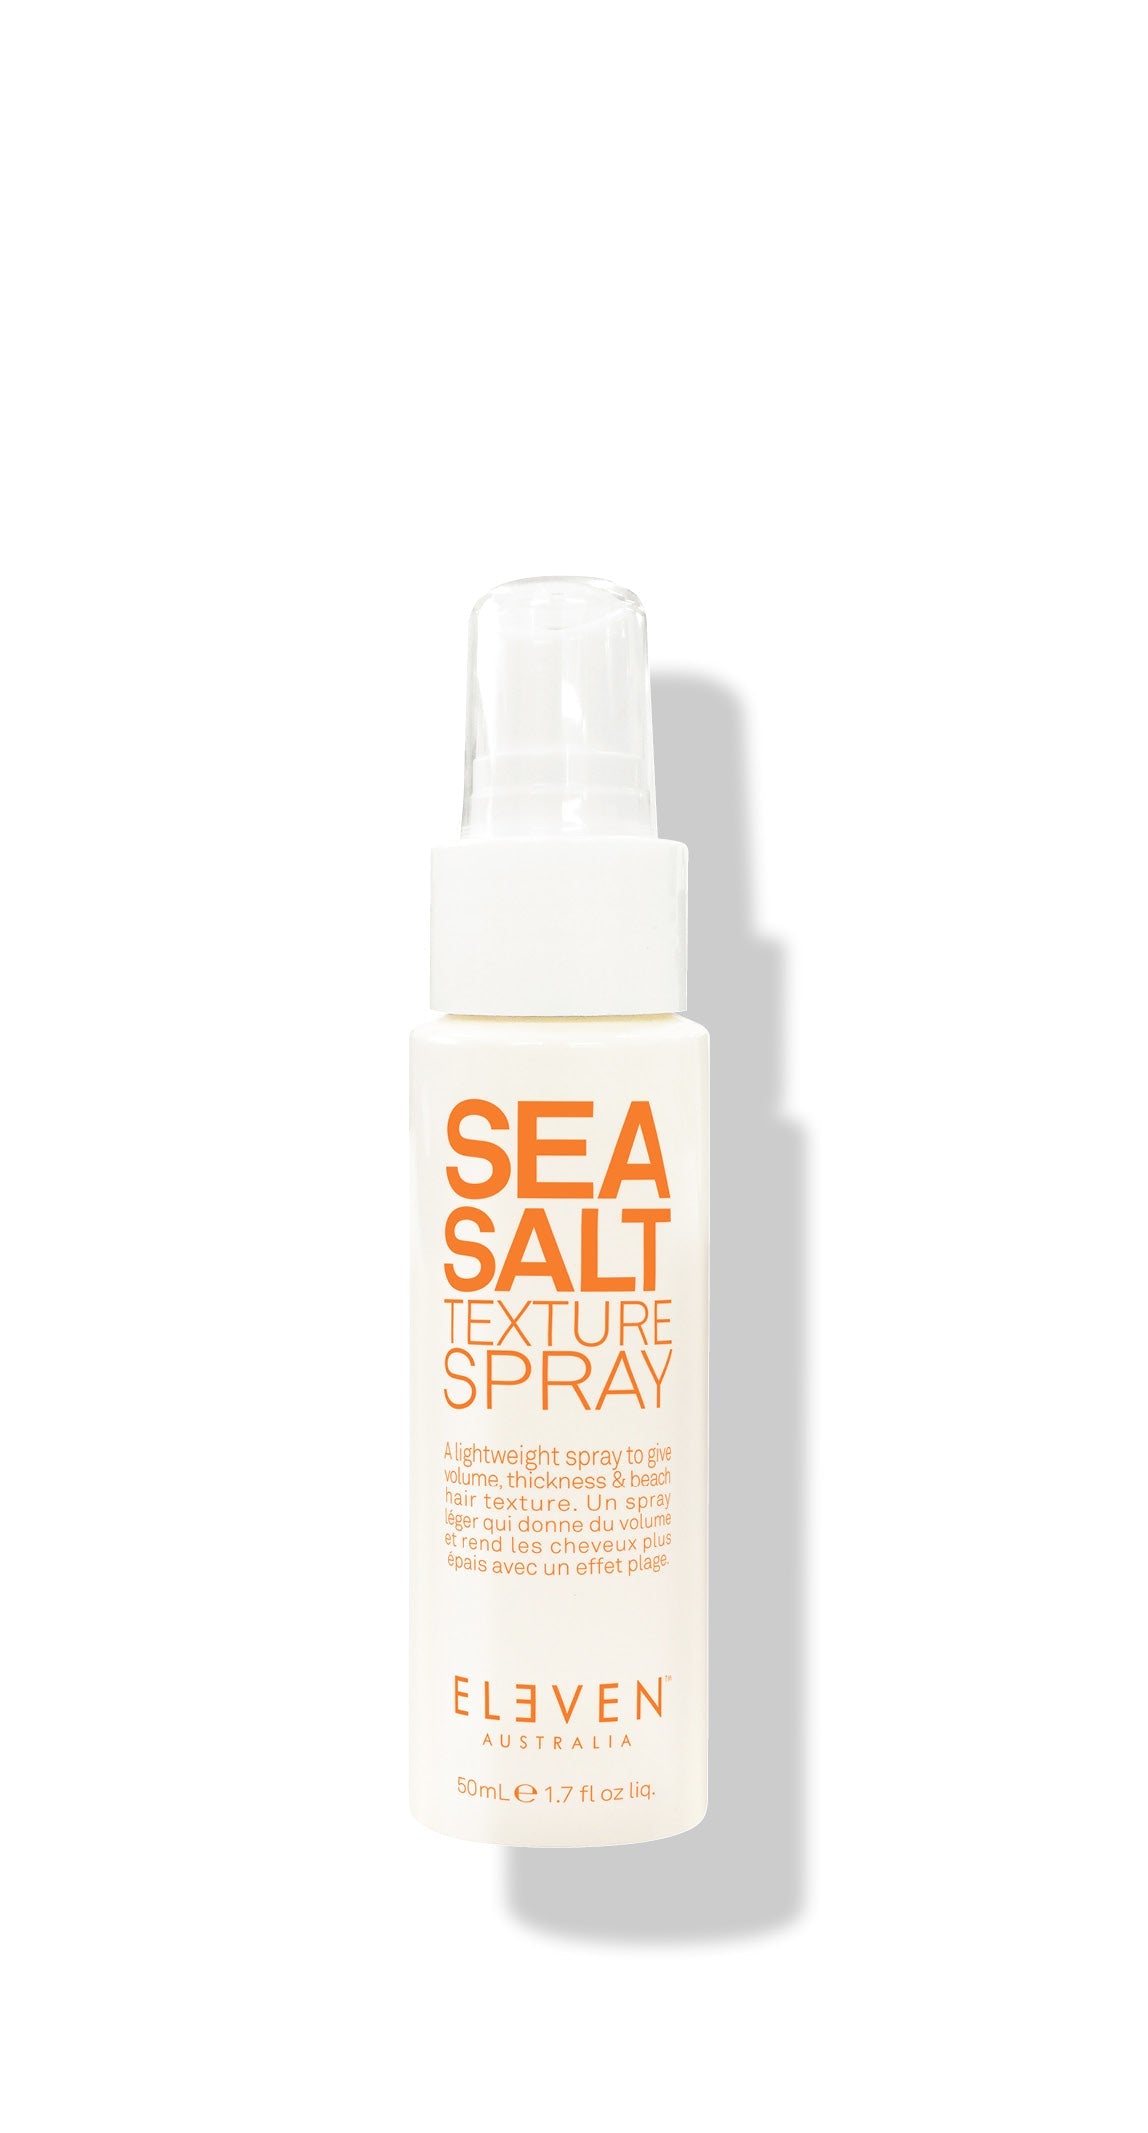 SEA SALT TEXTURE SPRAY 50ML